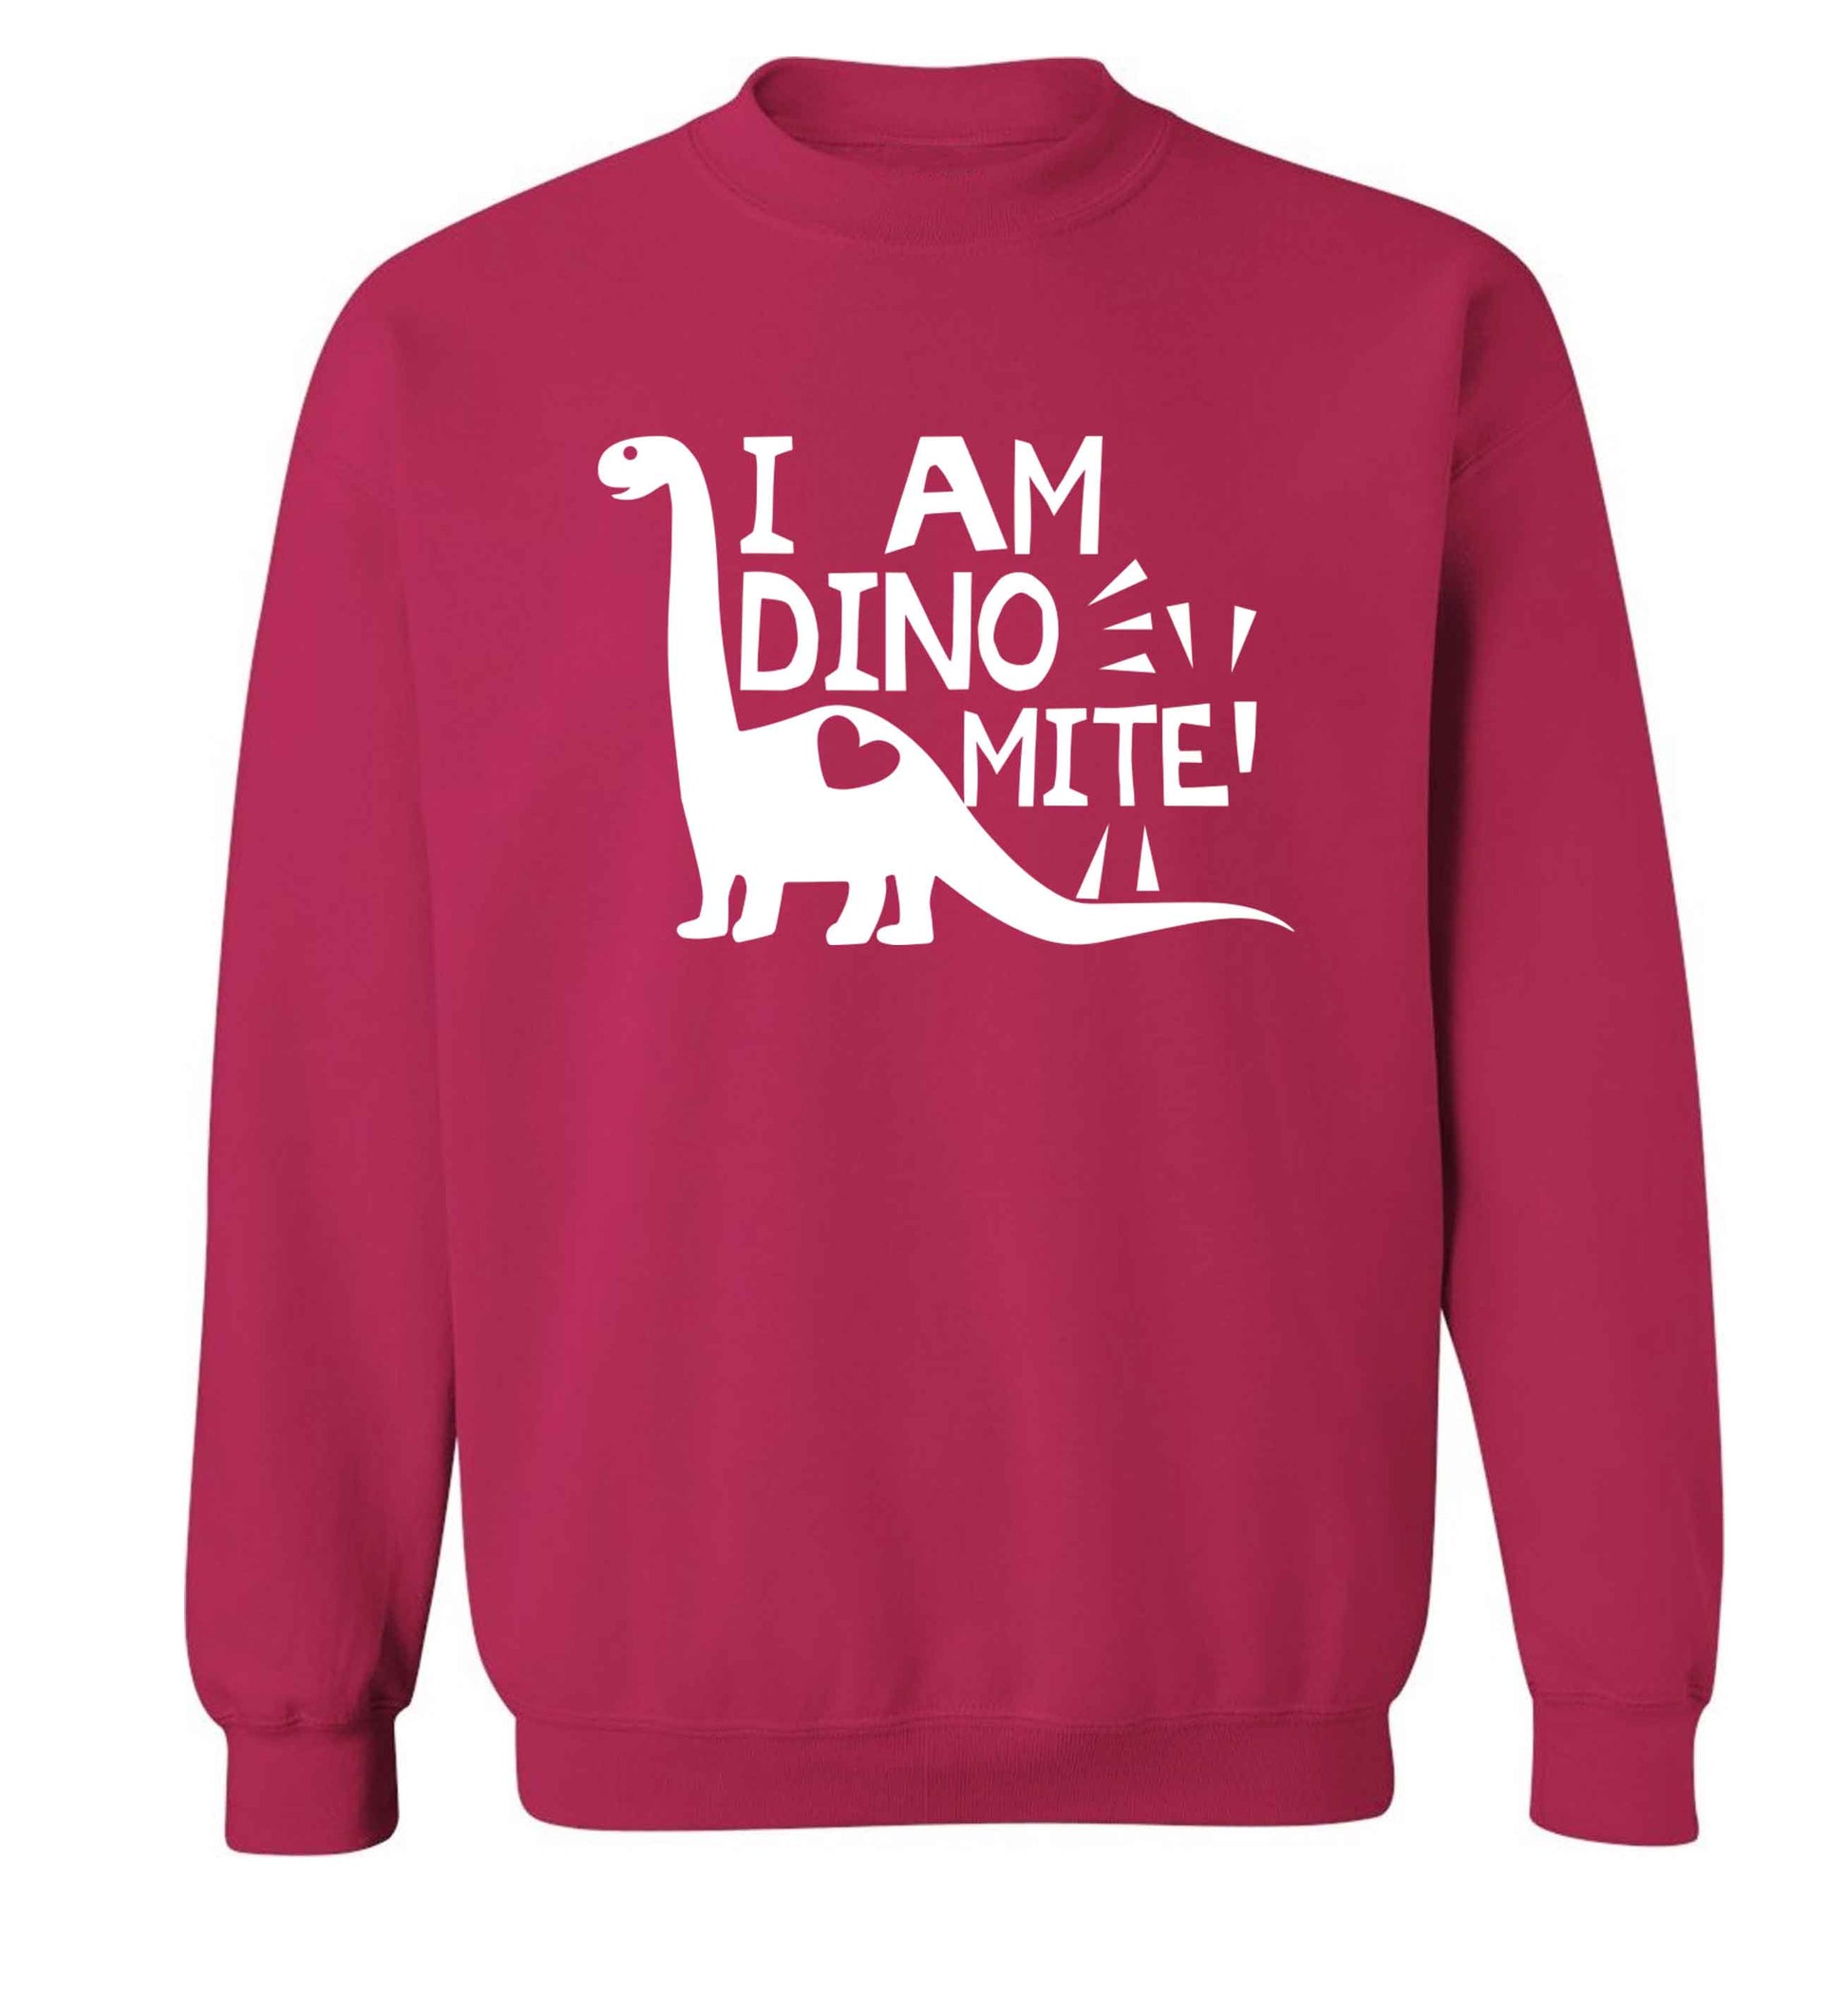 I am dinomite! Adult's unisex pink Sweater 2XL